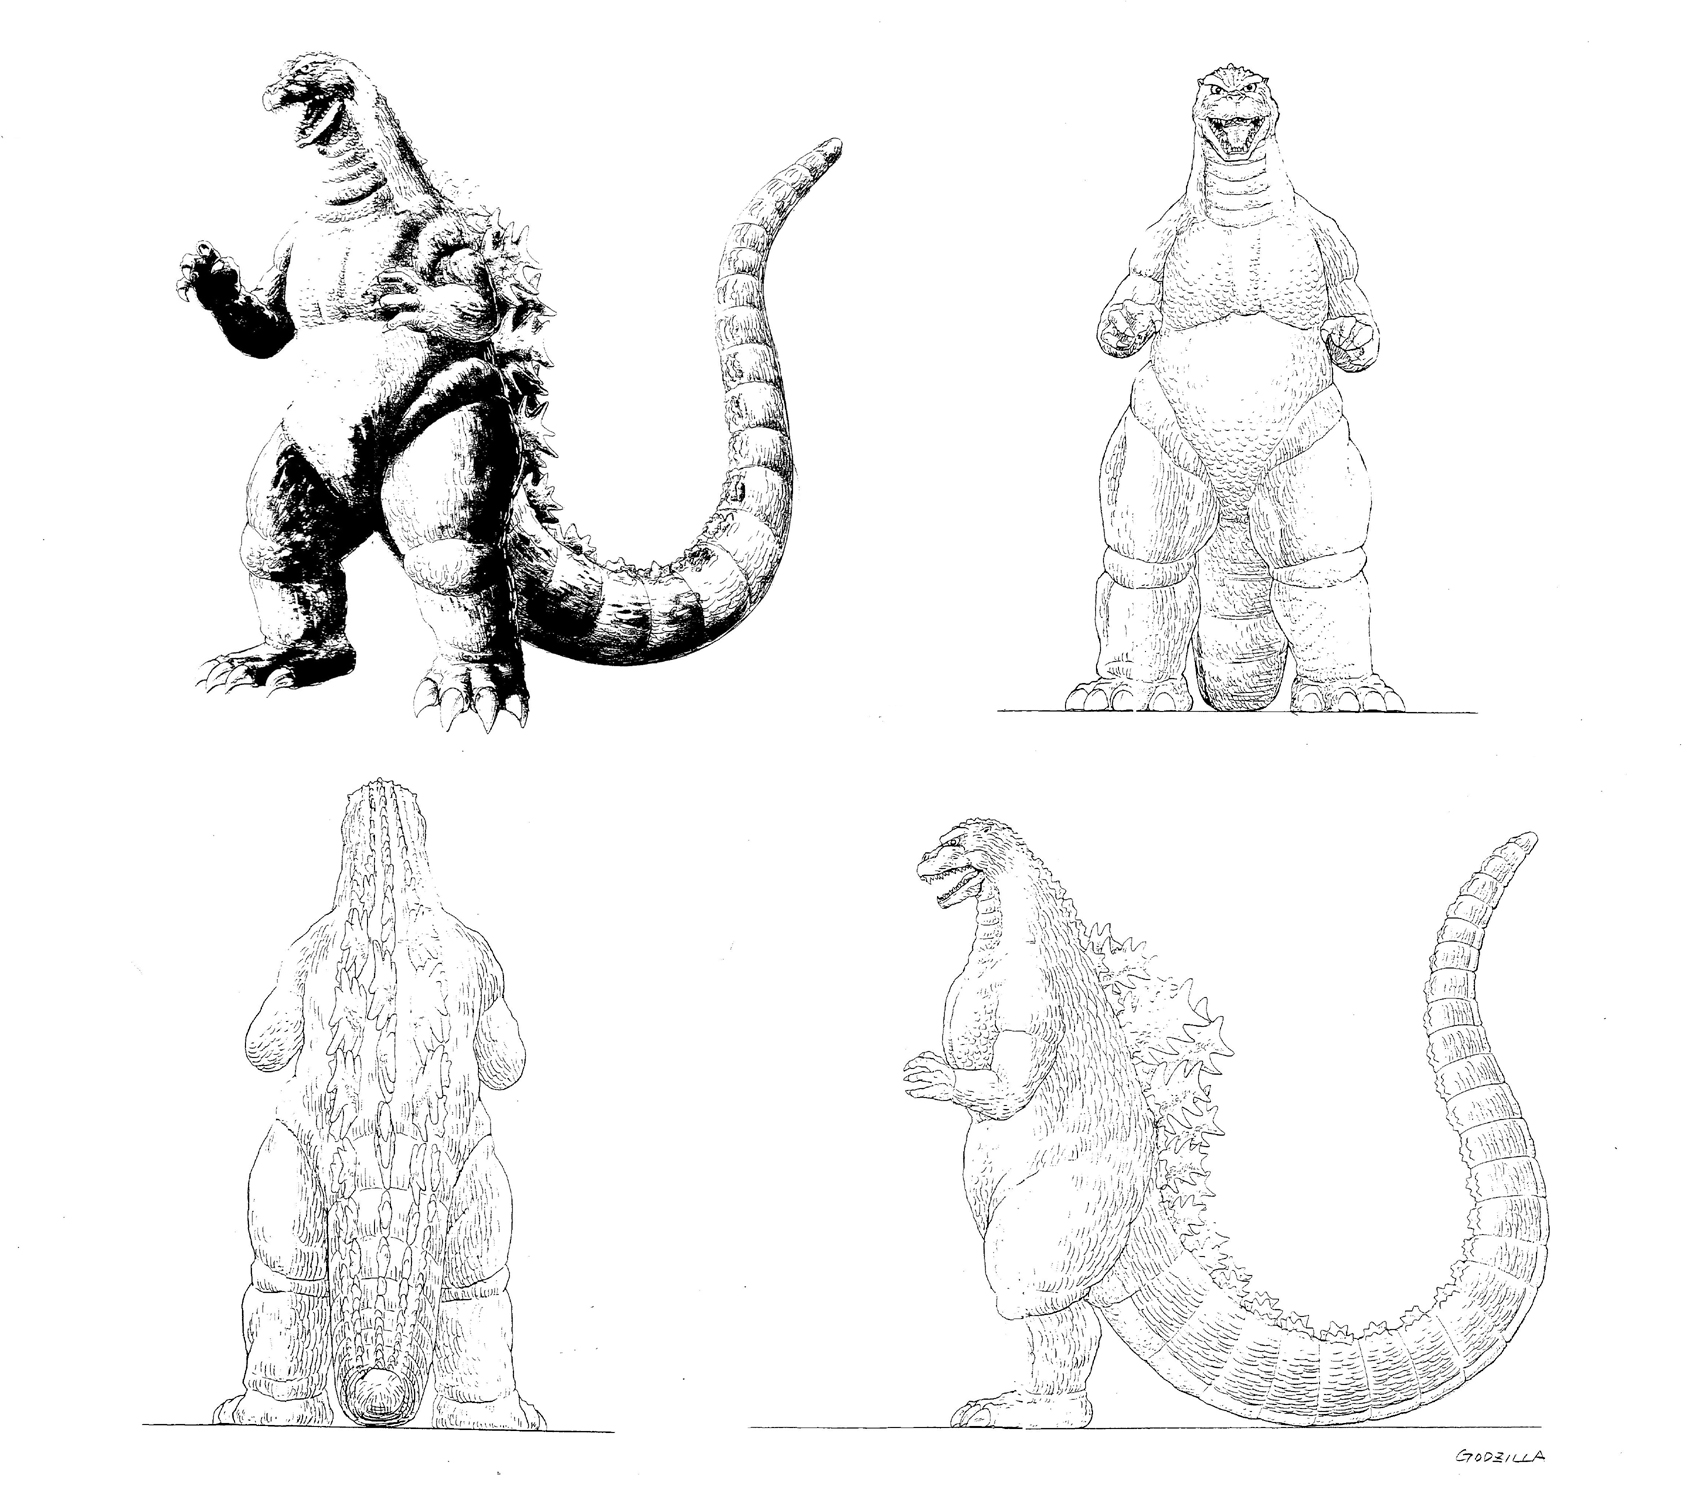 Godzilla vs. King Ghidorah - Gallery | Gojipedia | FANDOM powered by Wikia